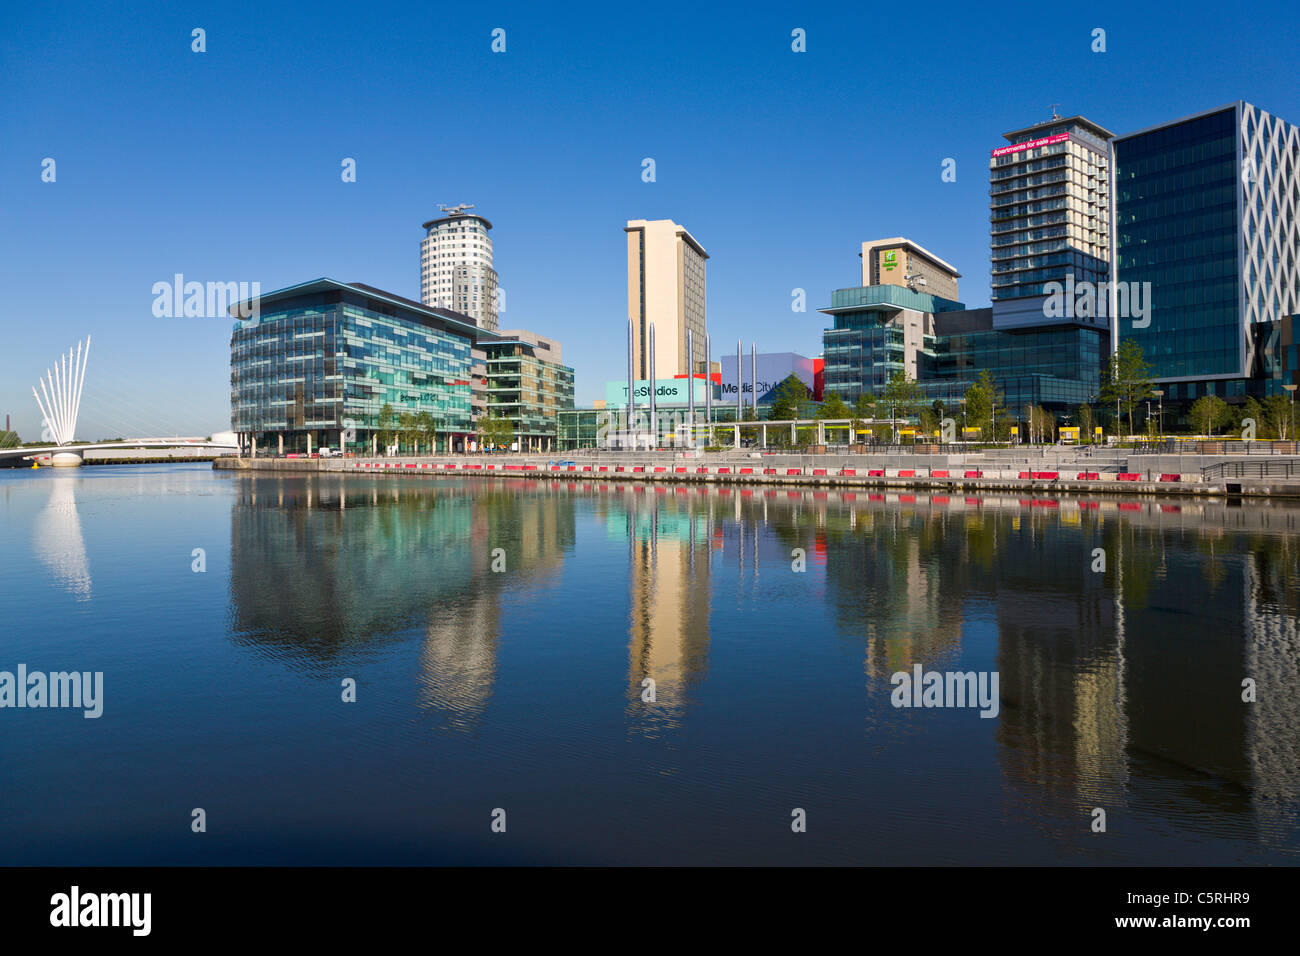 Media City, Salford Quays, Manchester, England Stock Photo